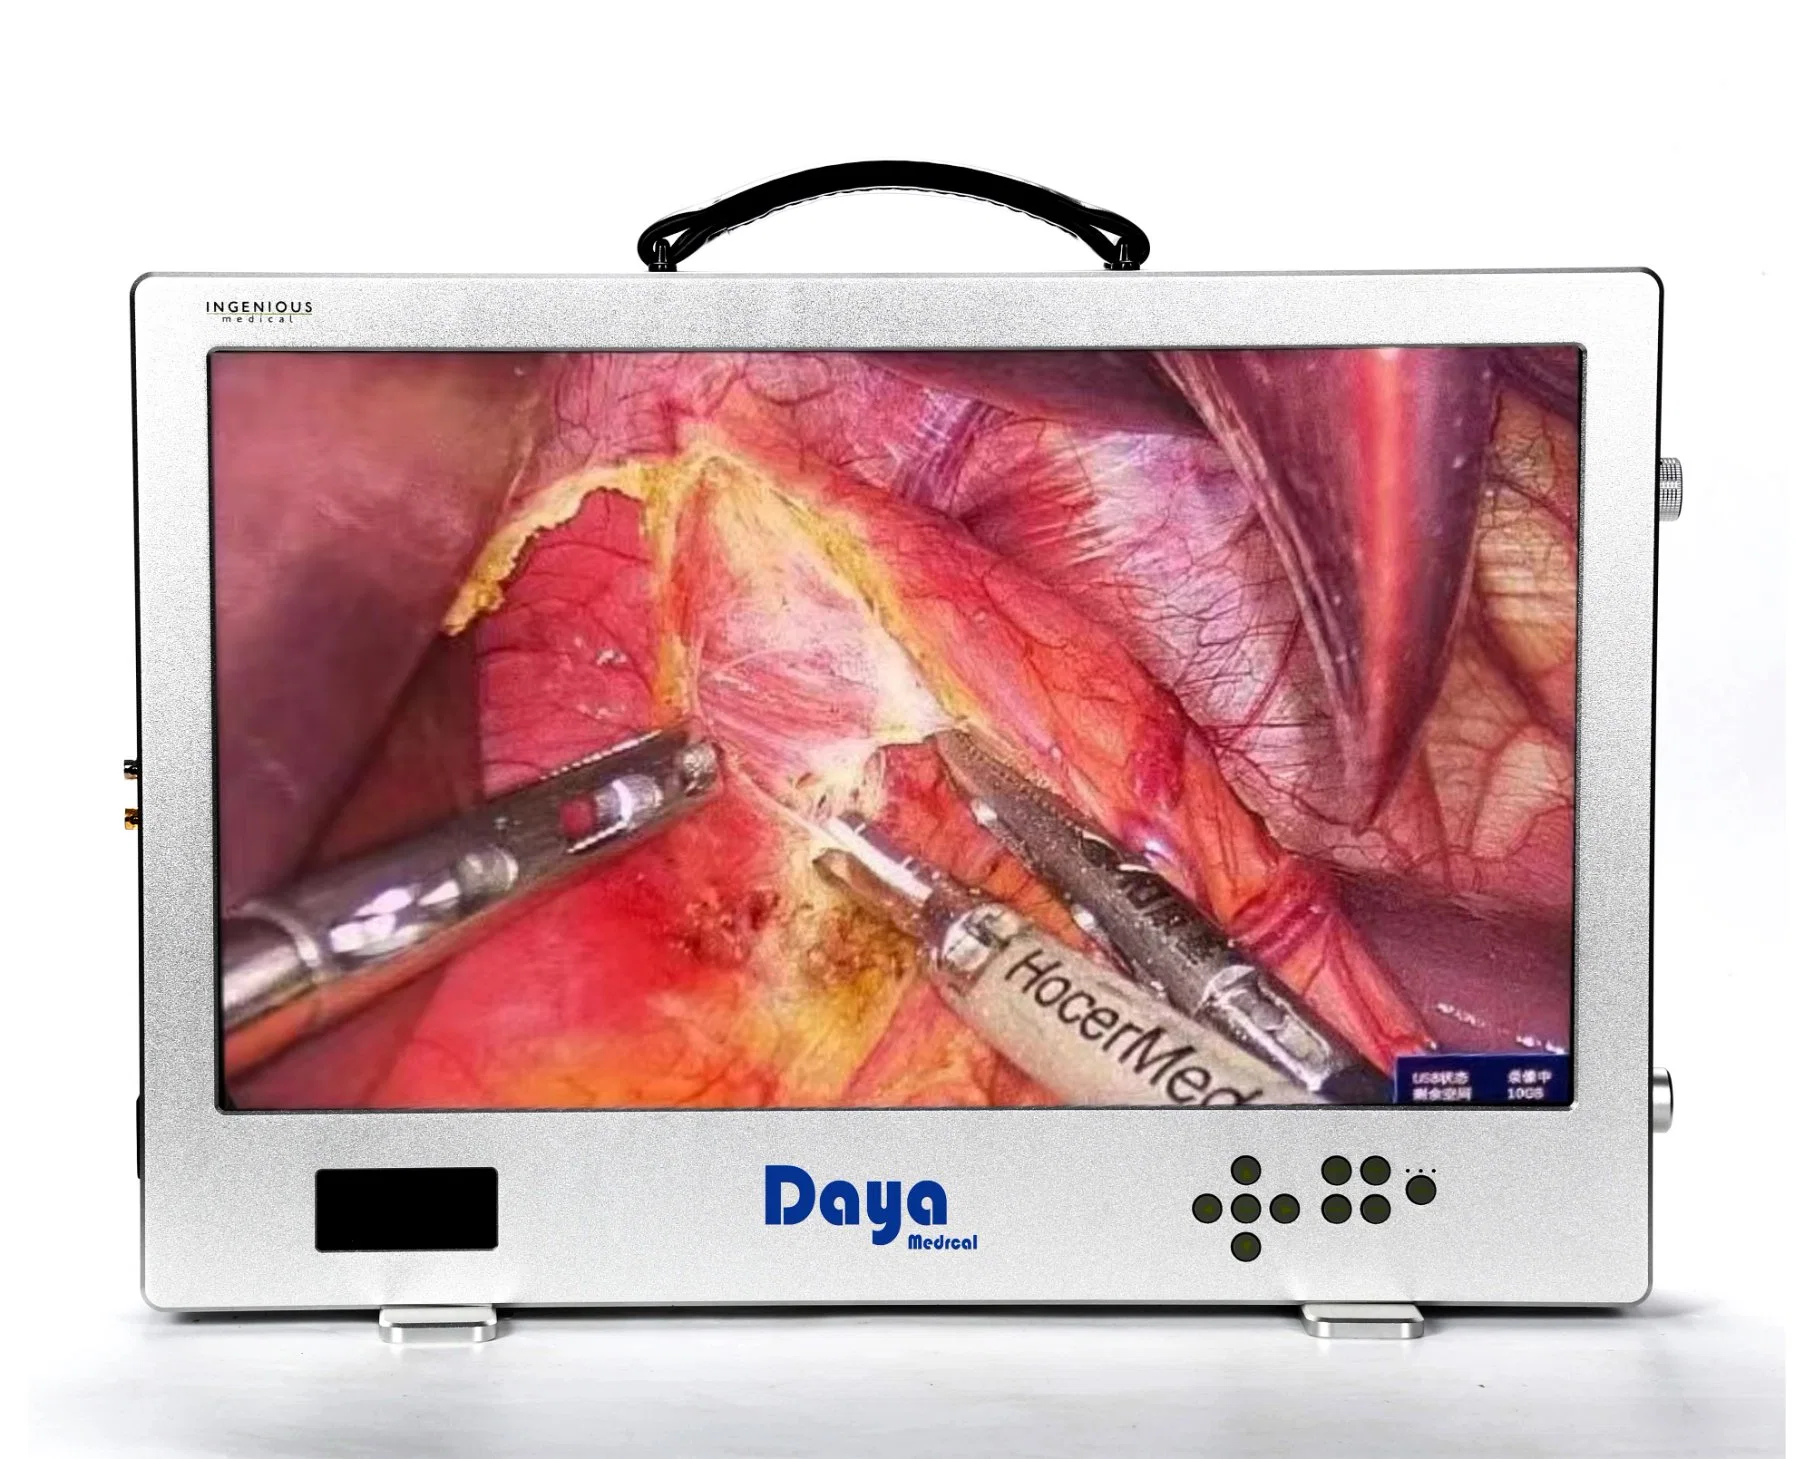 Surgical Hospital Medical Endoscopy Full HD Digital Portable USB Endoscope Camera System